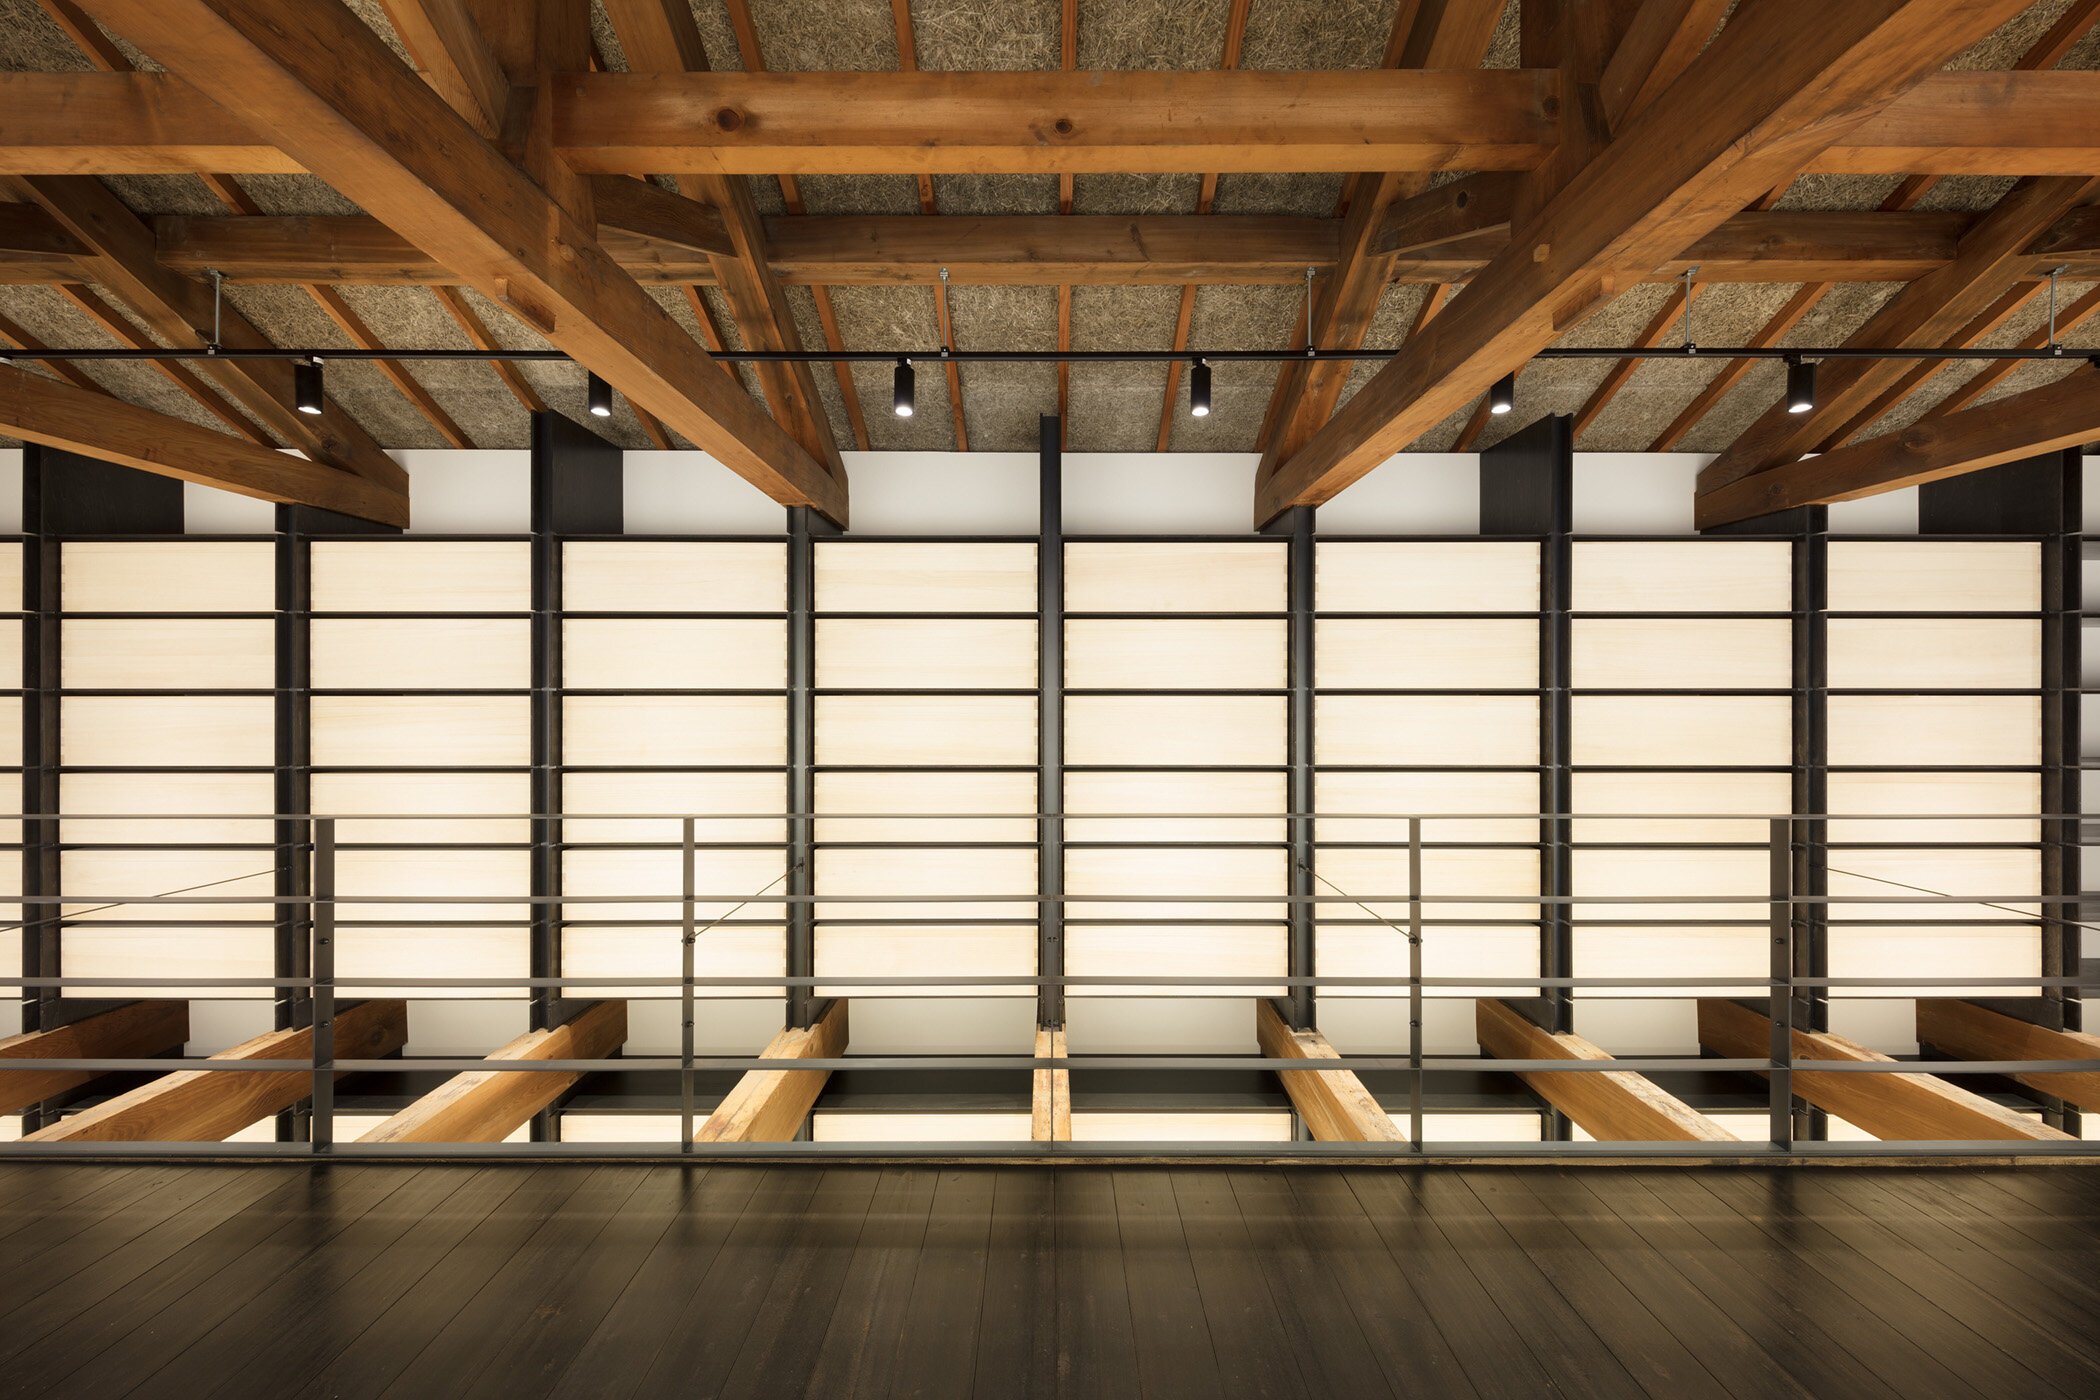  ABOUTの佛願忠洋がインテリアデザインを手掛けた、中川政七商店の「時蔵 TOKIGURA」。1階から2階まで、壁面の桐箱は連続する 